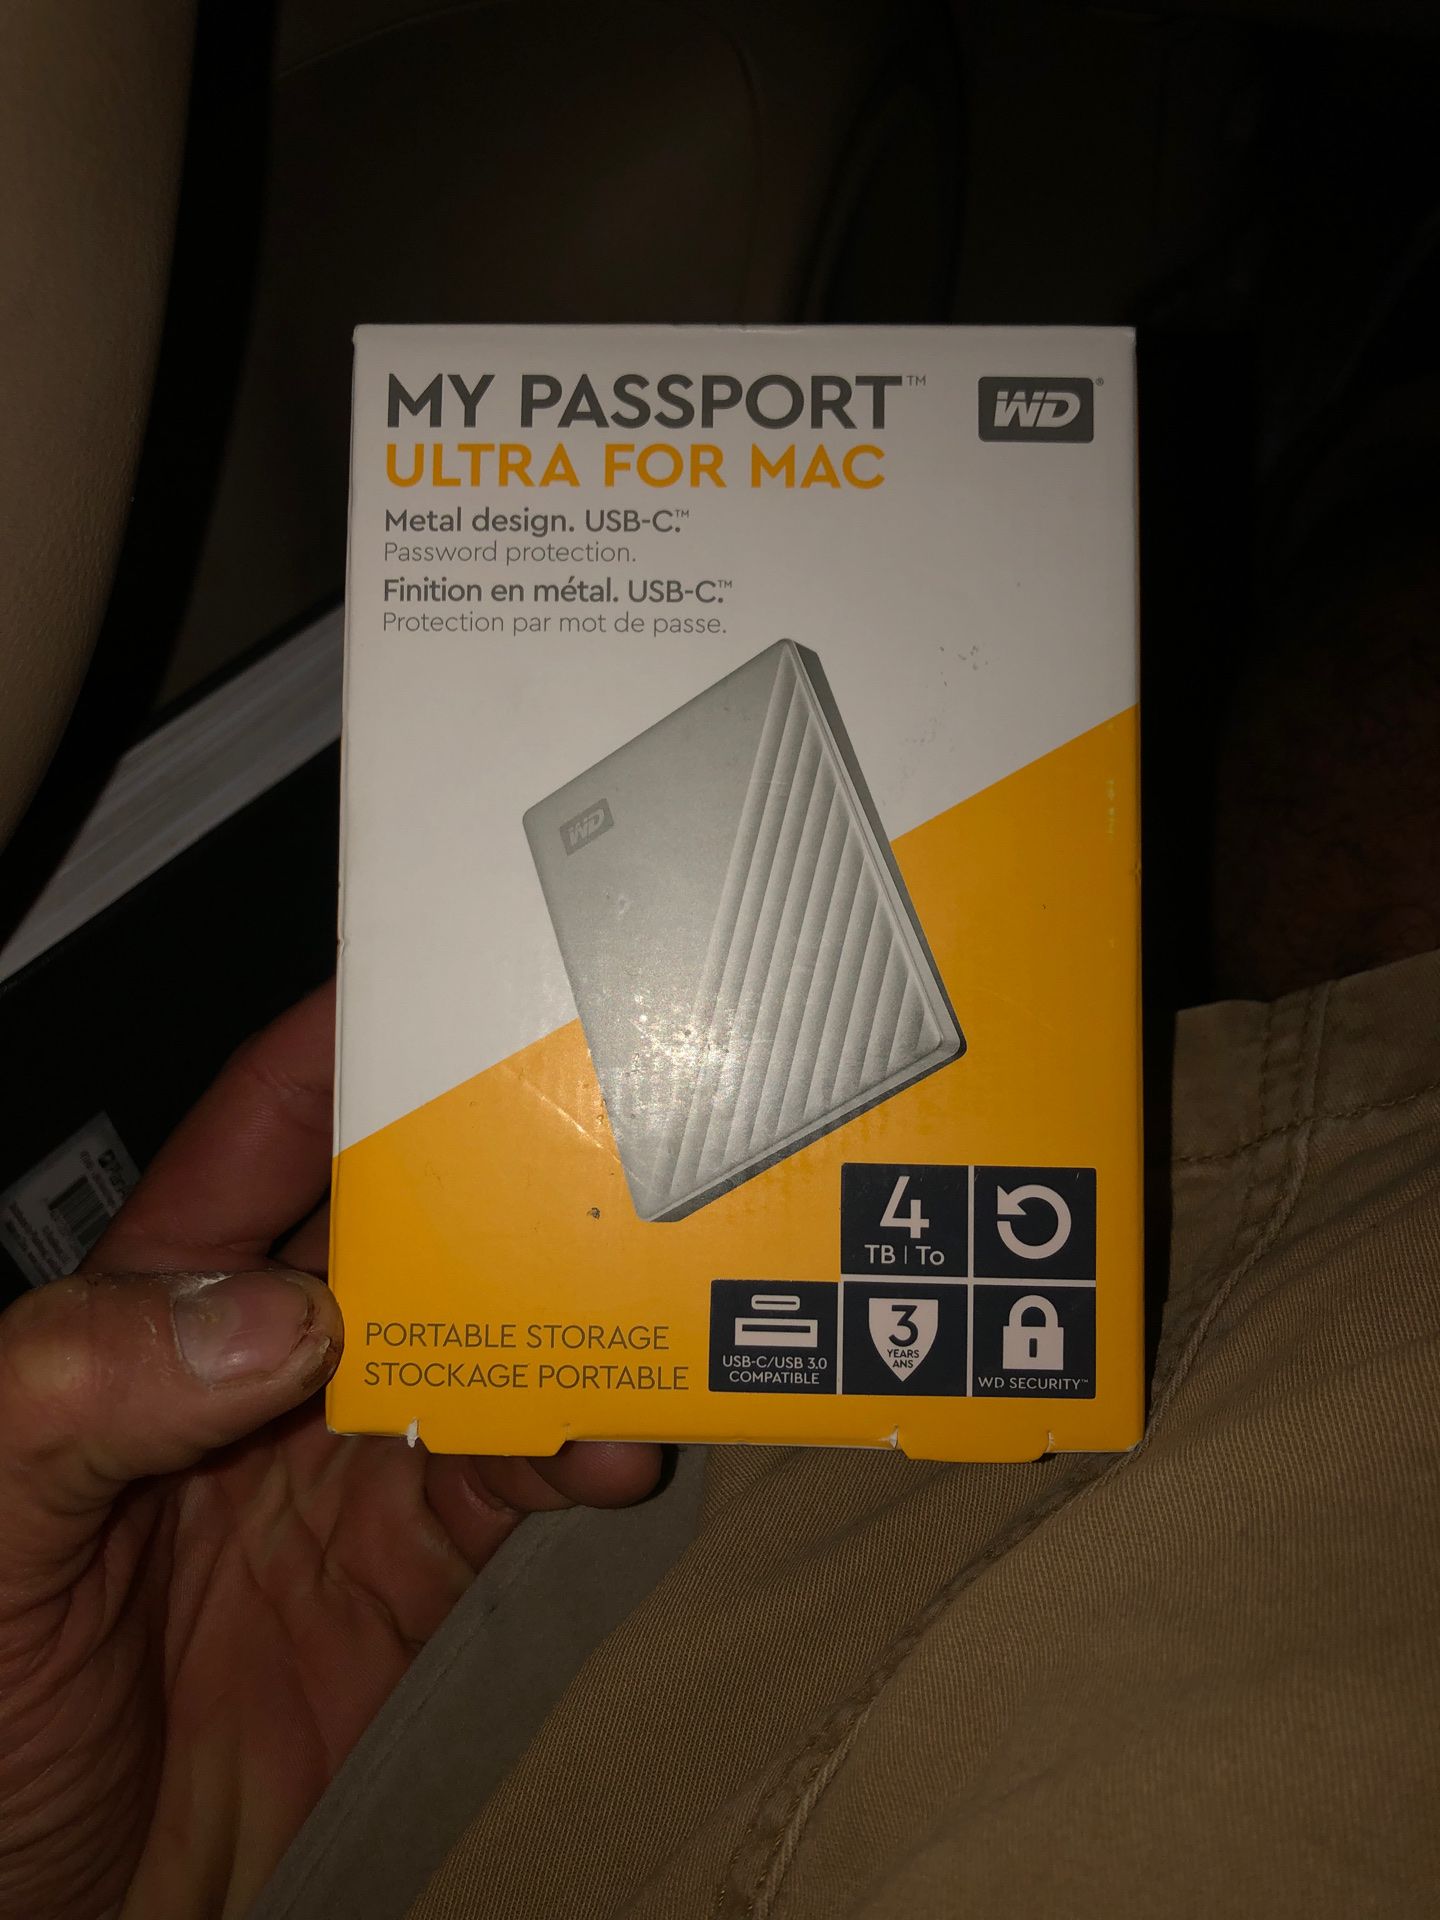 My Passport for Macs